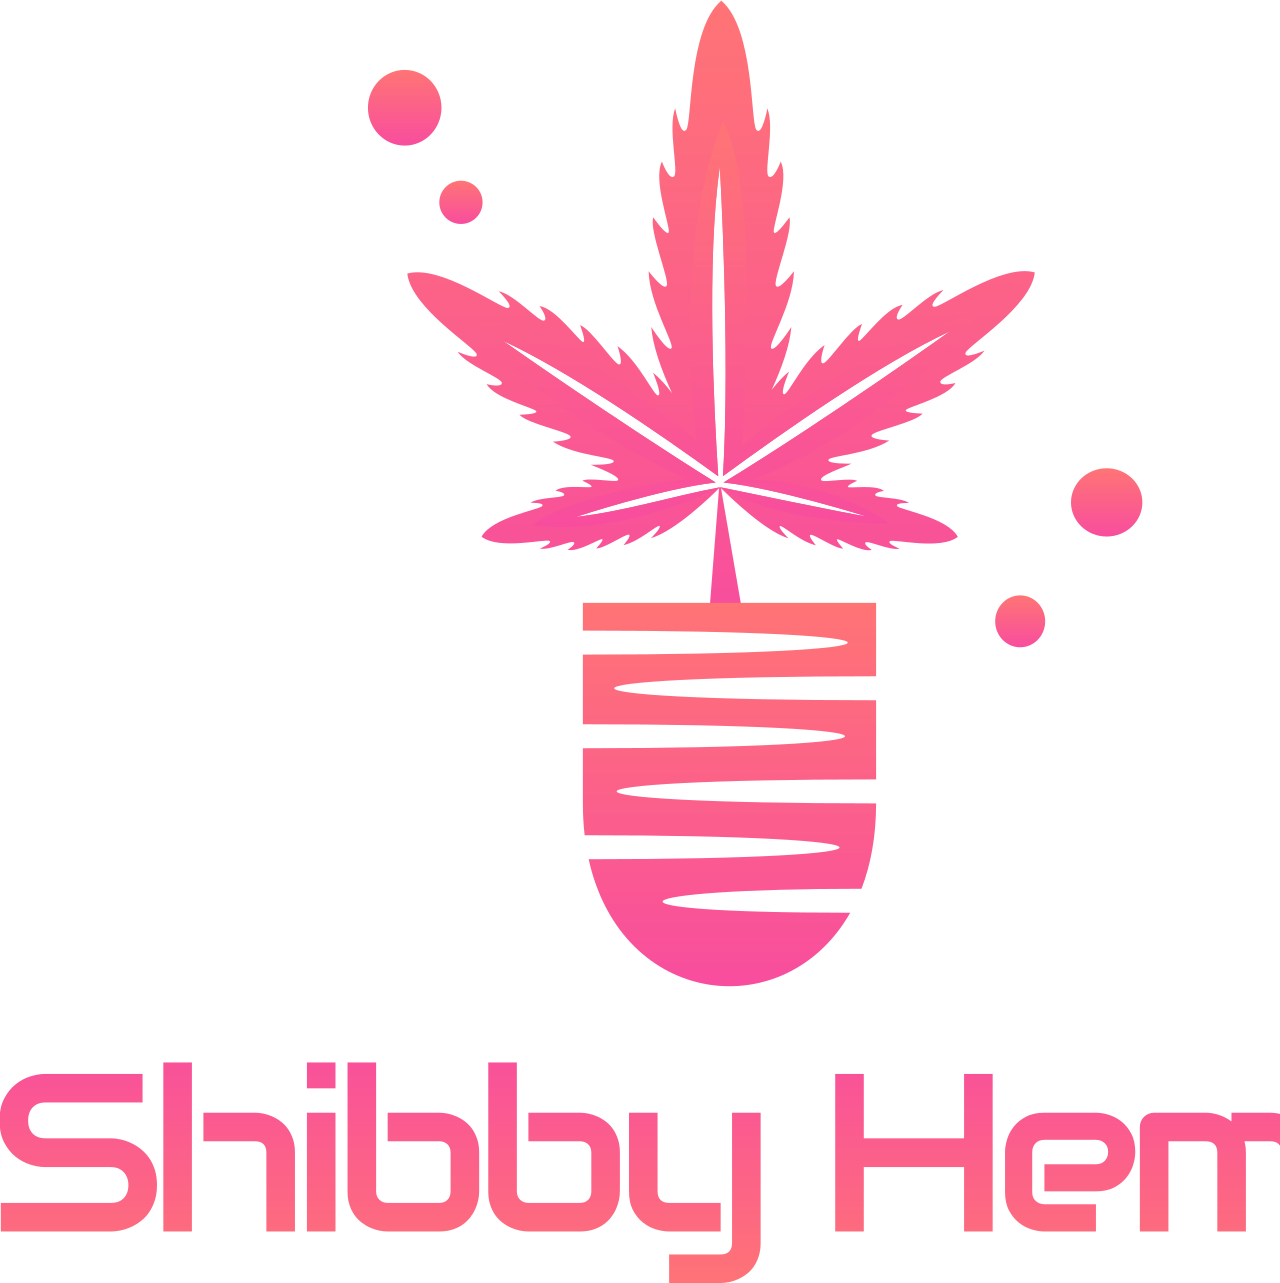 SHIBBY's web page